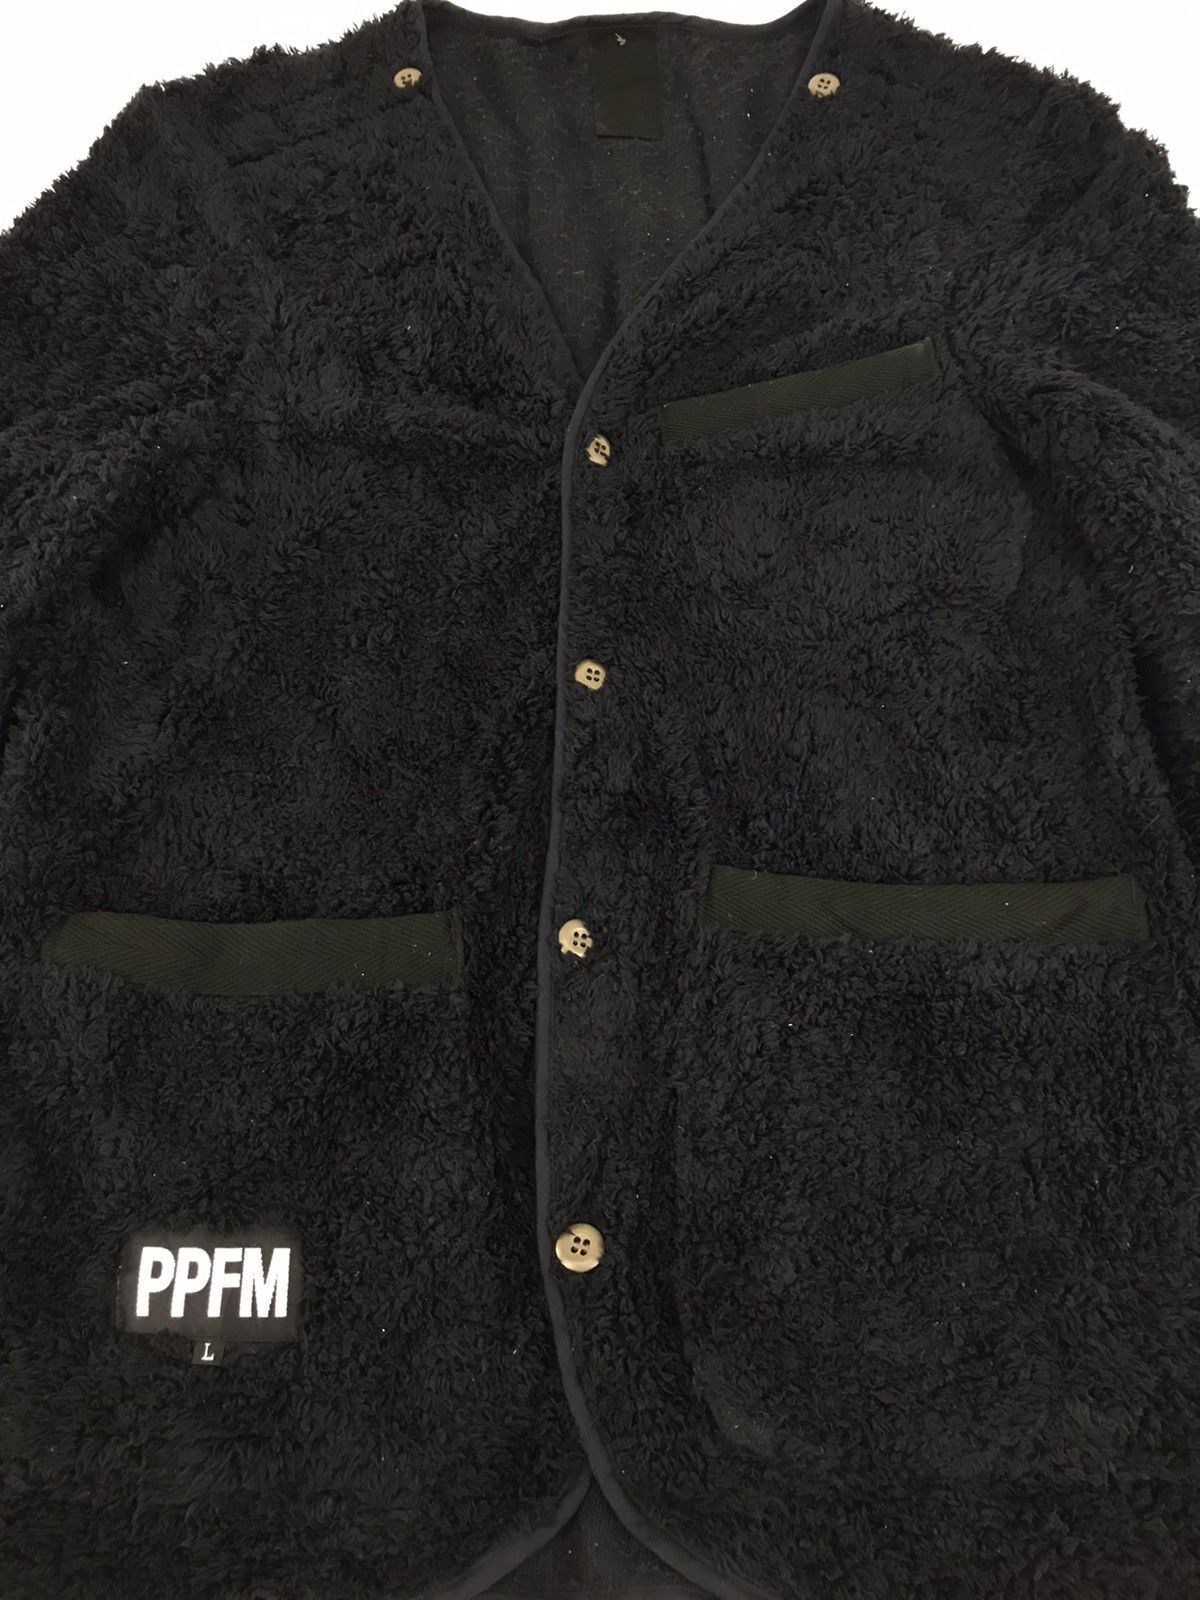 Designer PPFM Sherpa Button Jacket Fluffy Fleece Size US S / EU 44-46 / 1 - 4 Thumbnail